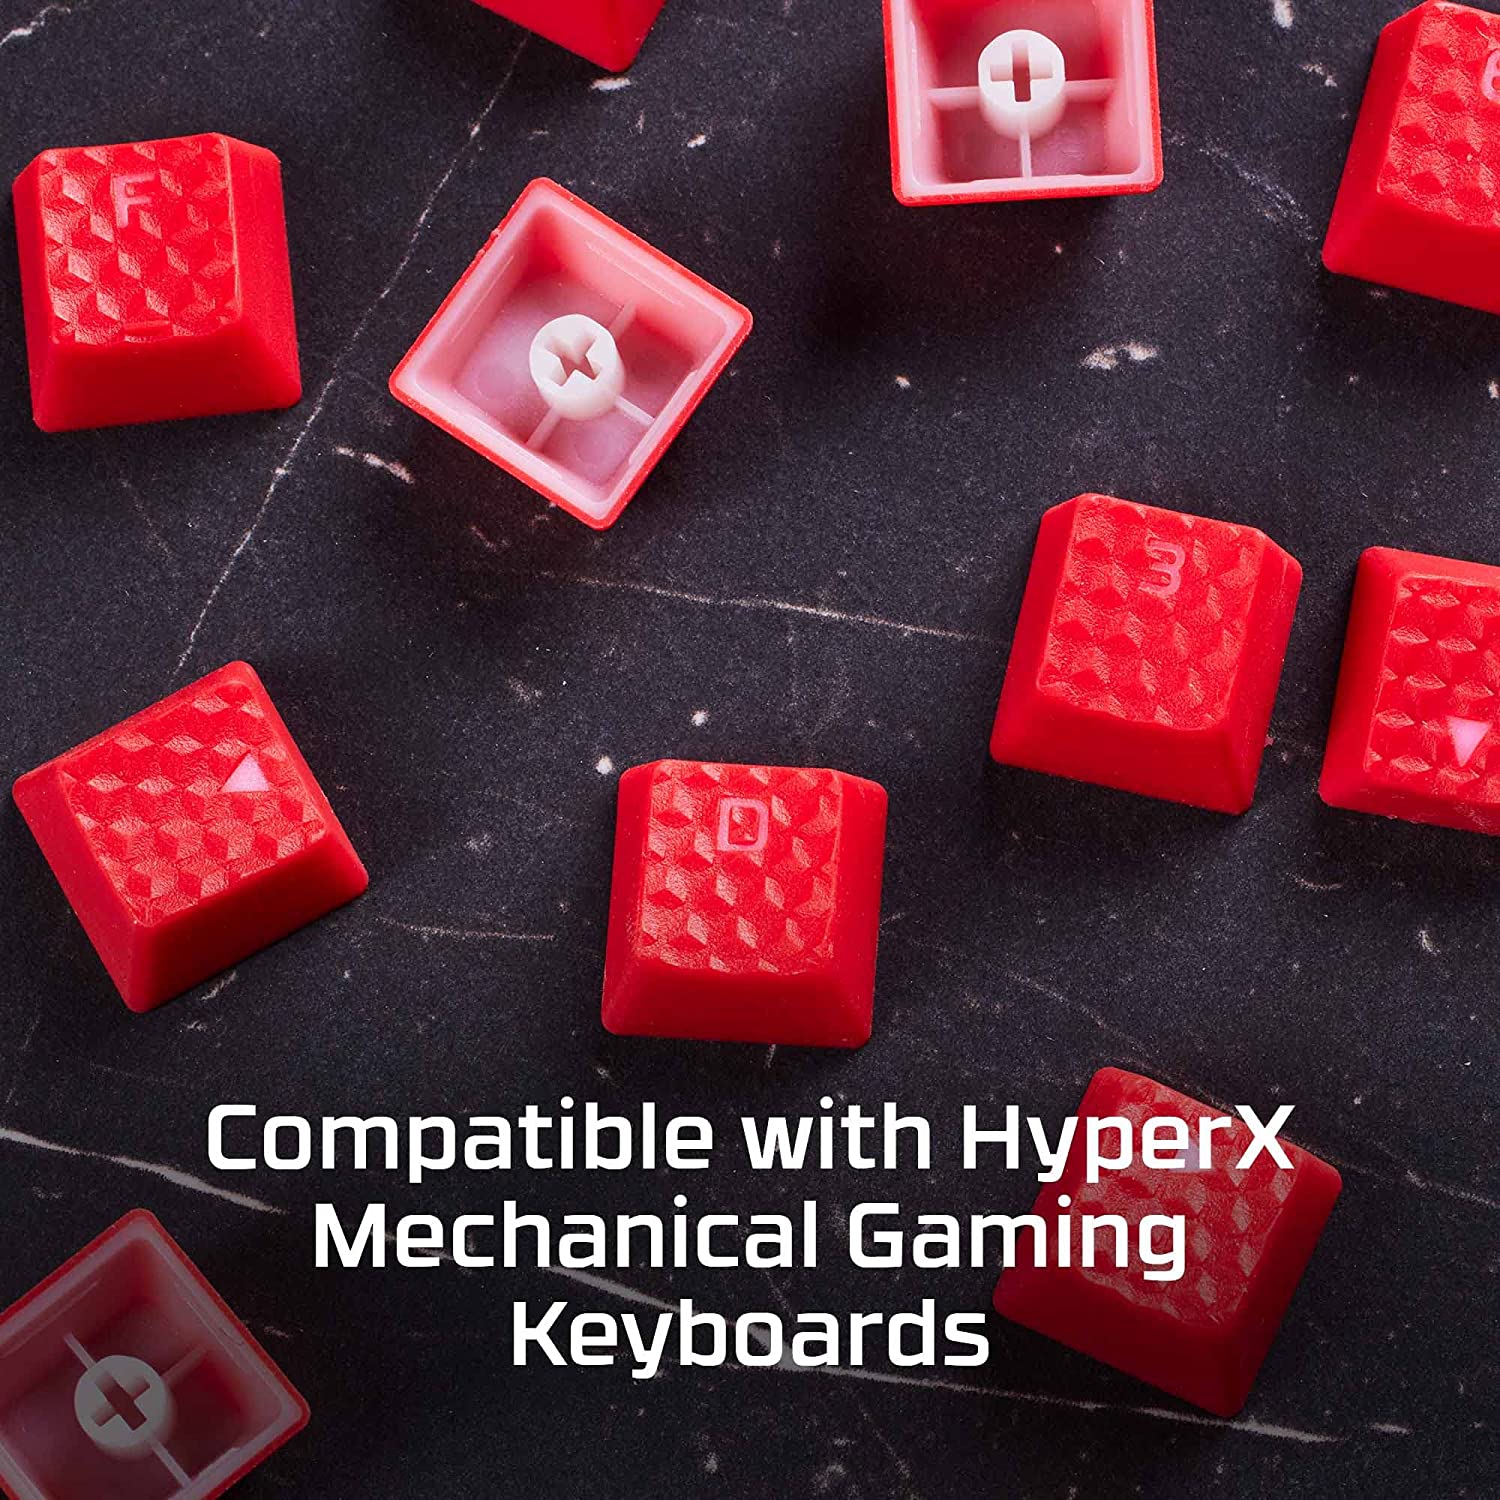 Keycaps HyperX - Rubber Keycaps - Blue 